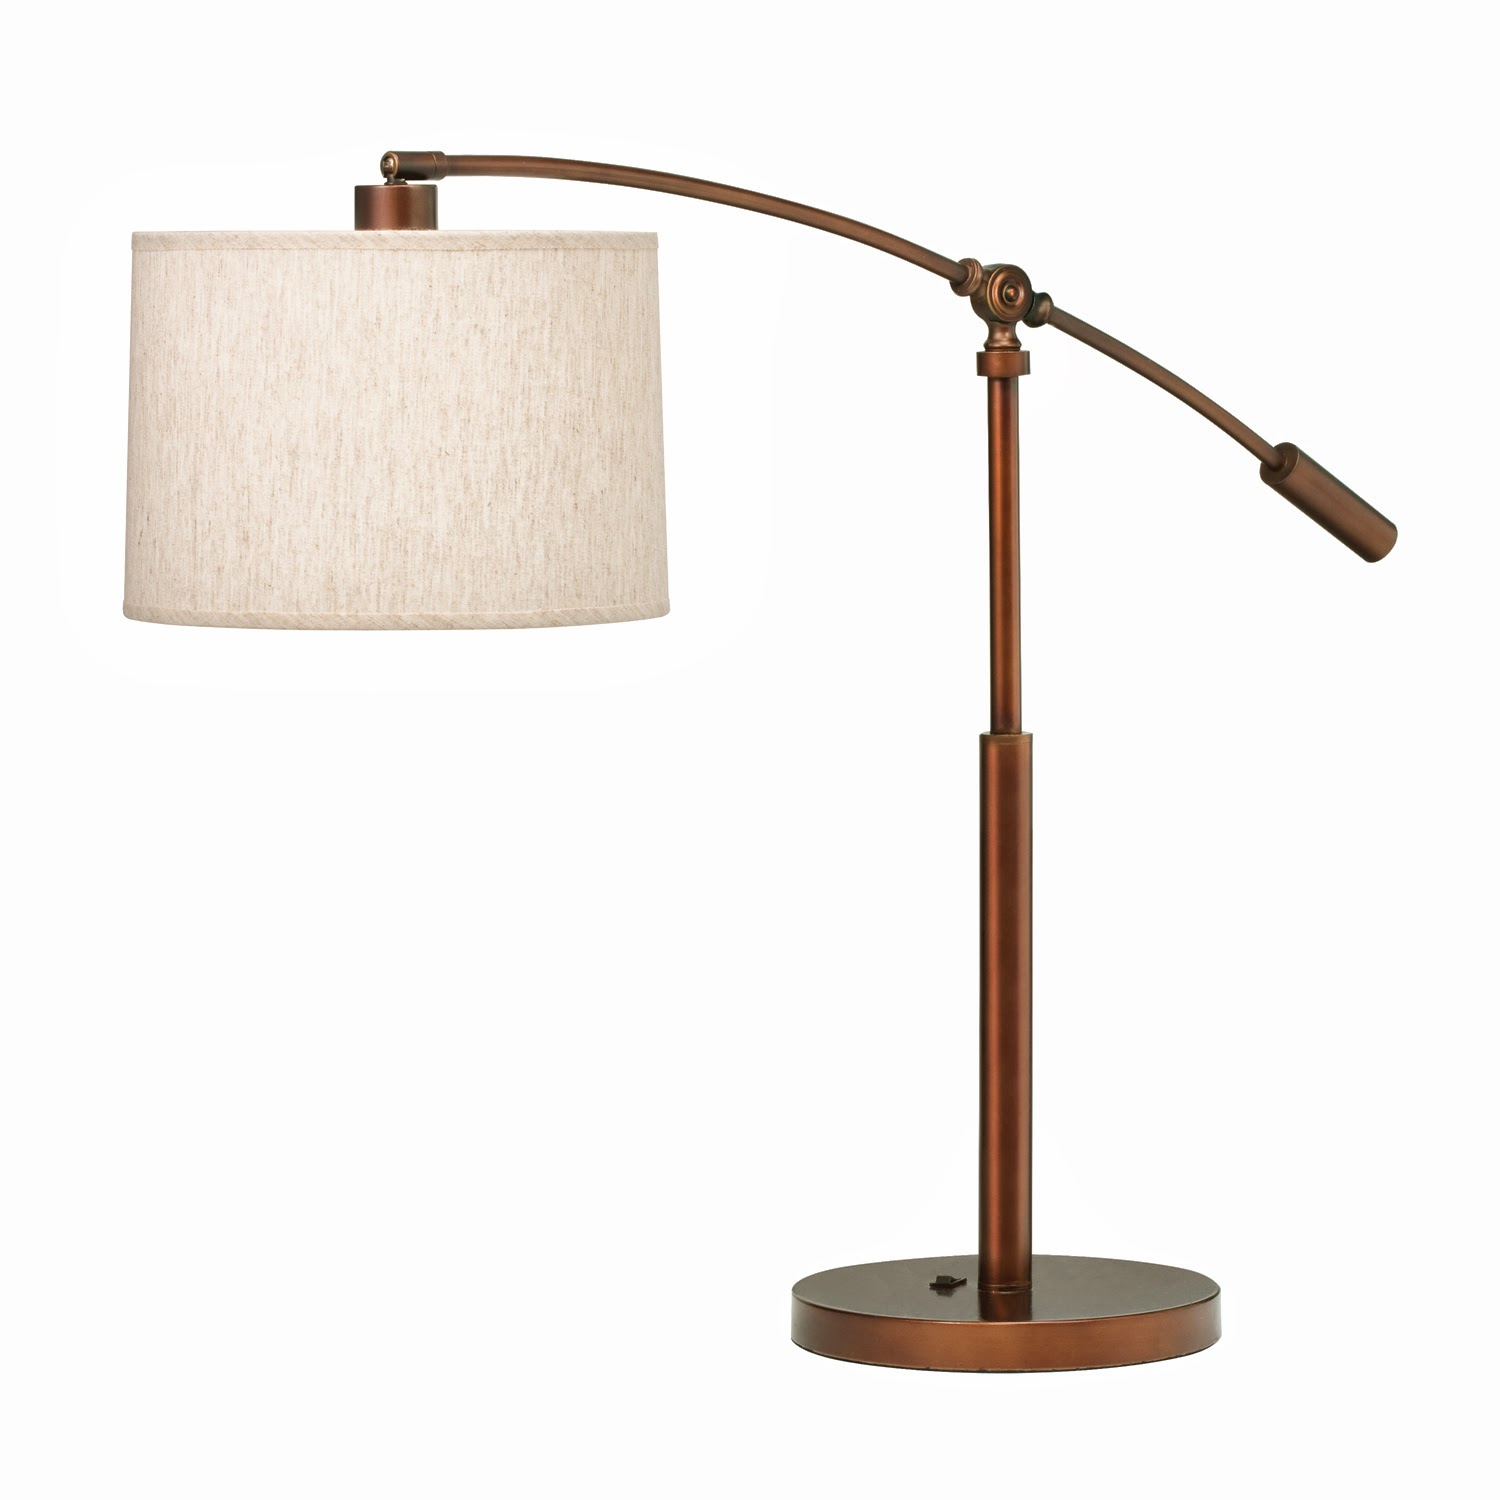 Floor Lamps Best Lamp For Reading In Bed Best Fade regarding dimensions 1500 X 1500